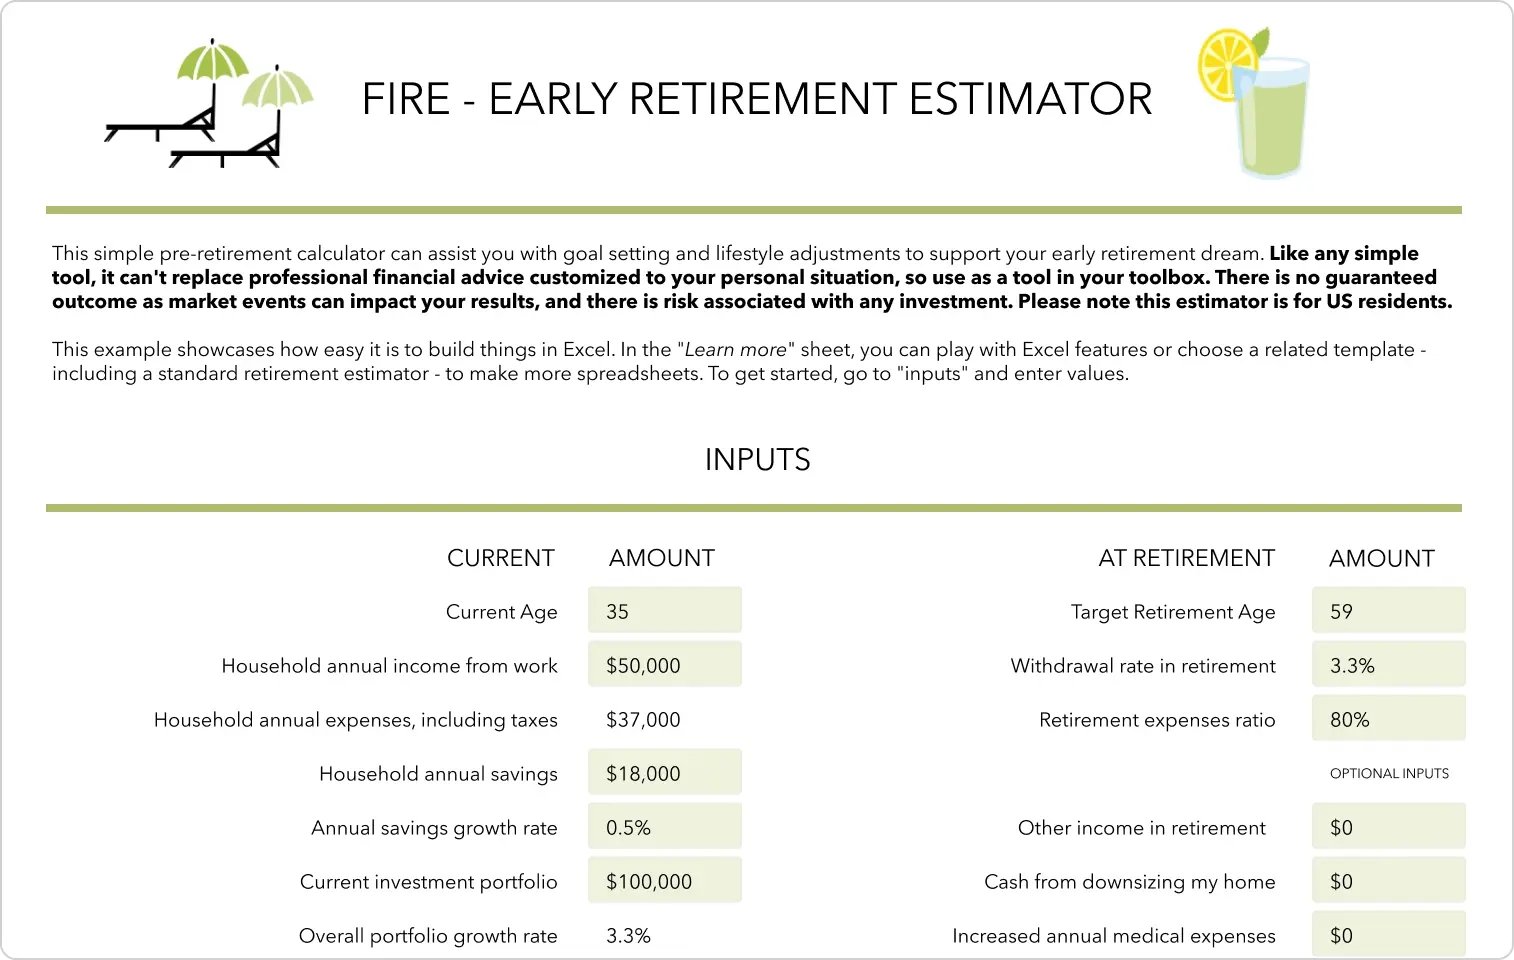 An image of a FIRE estimator template.